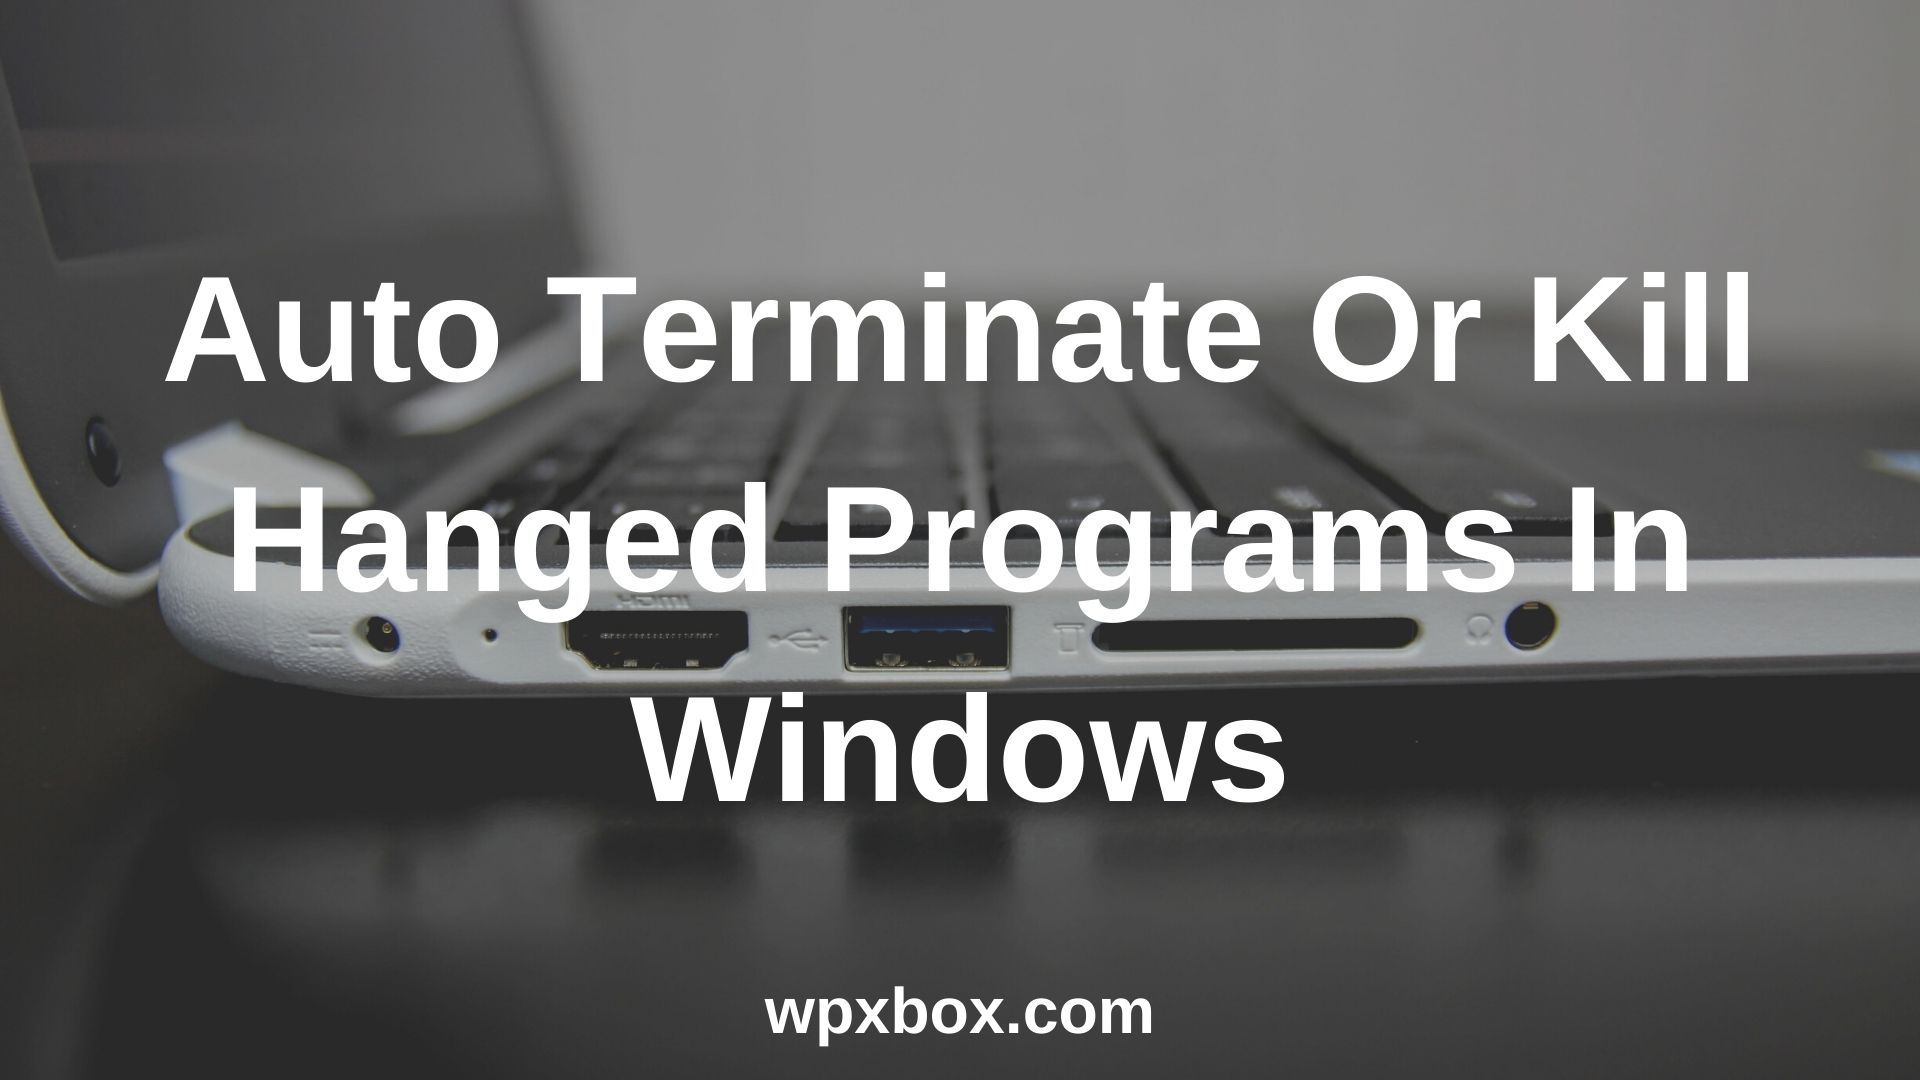 macbook not responding in windows how to terminate